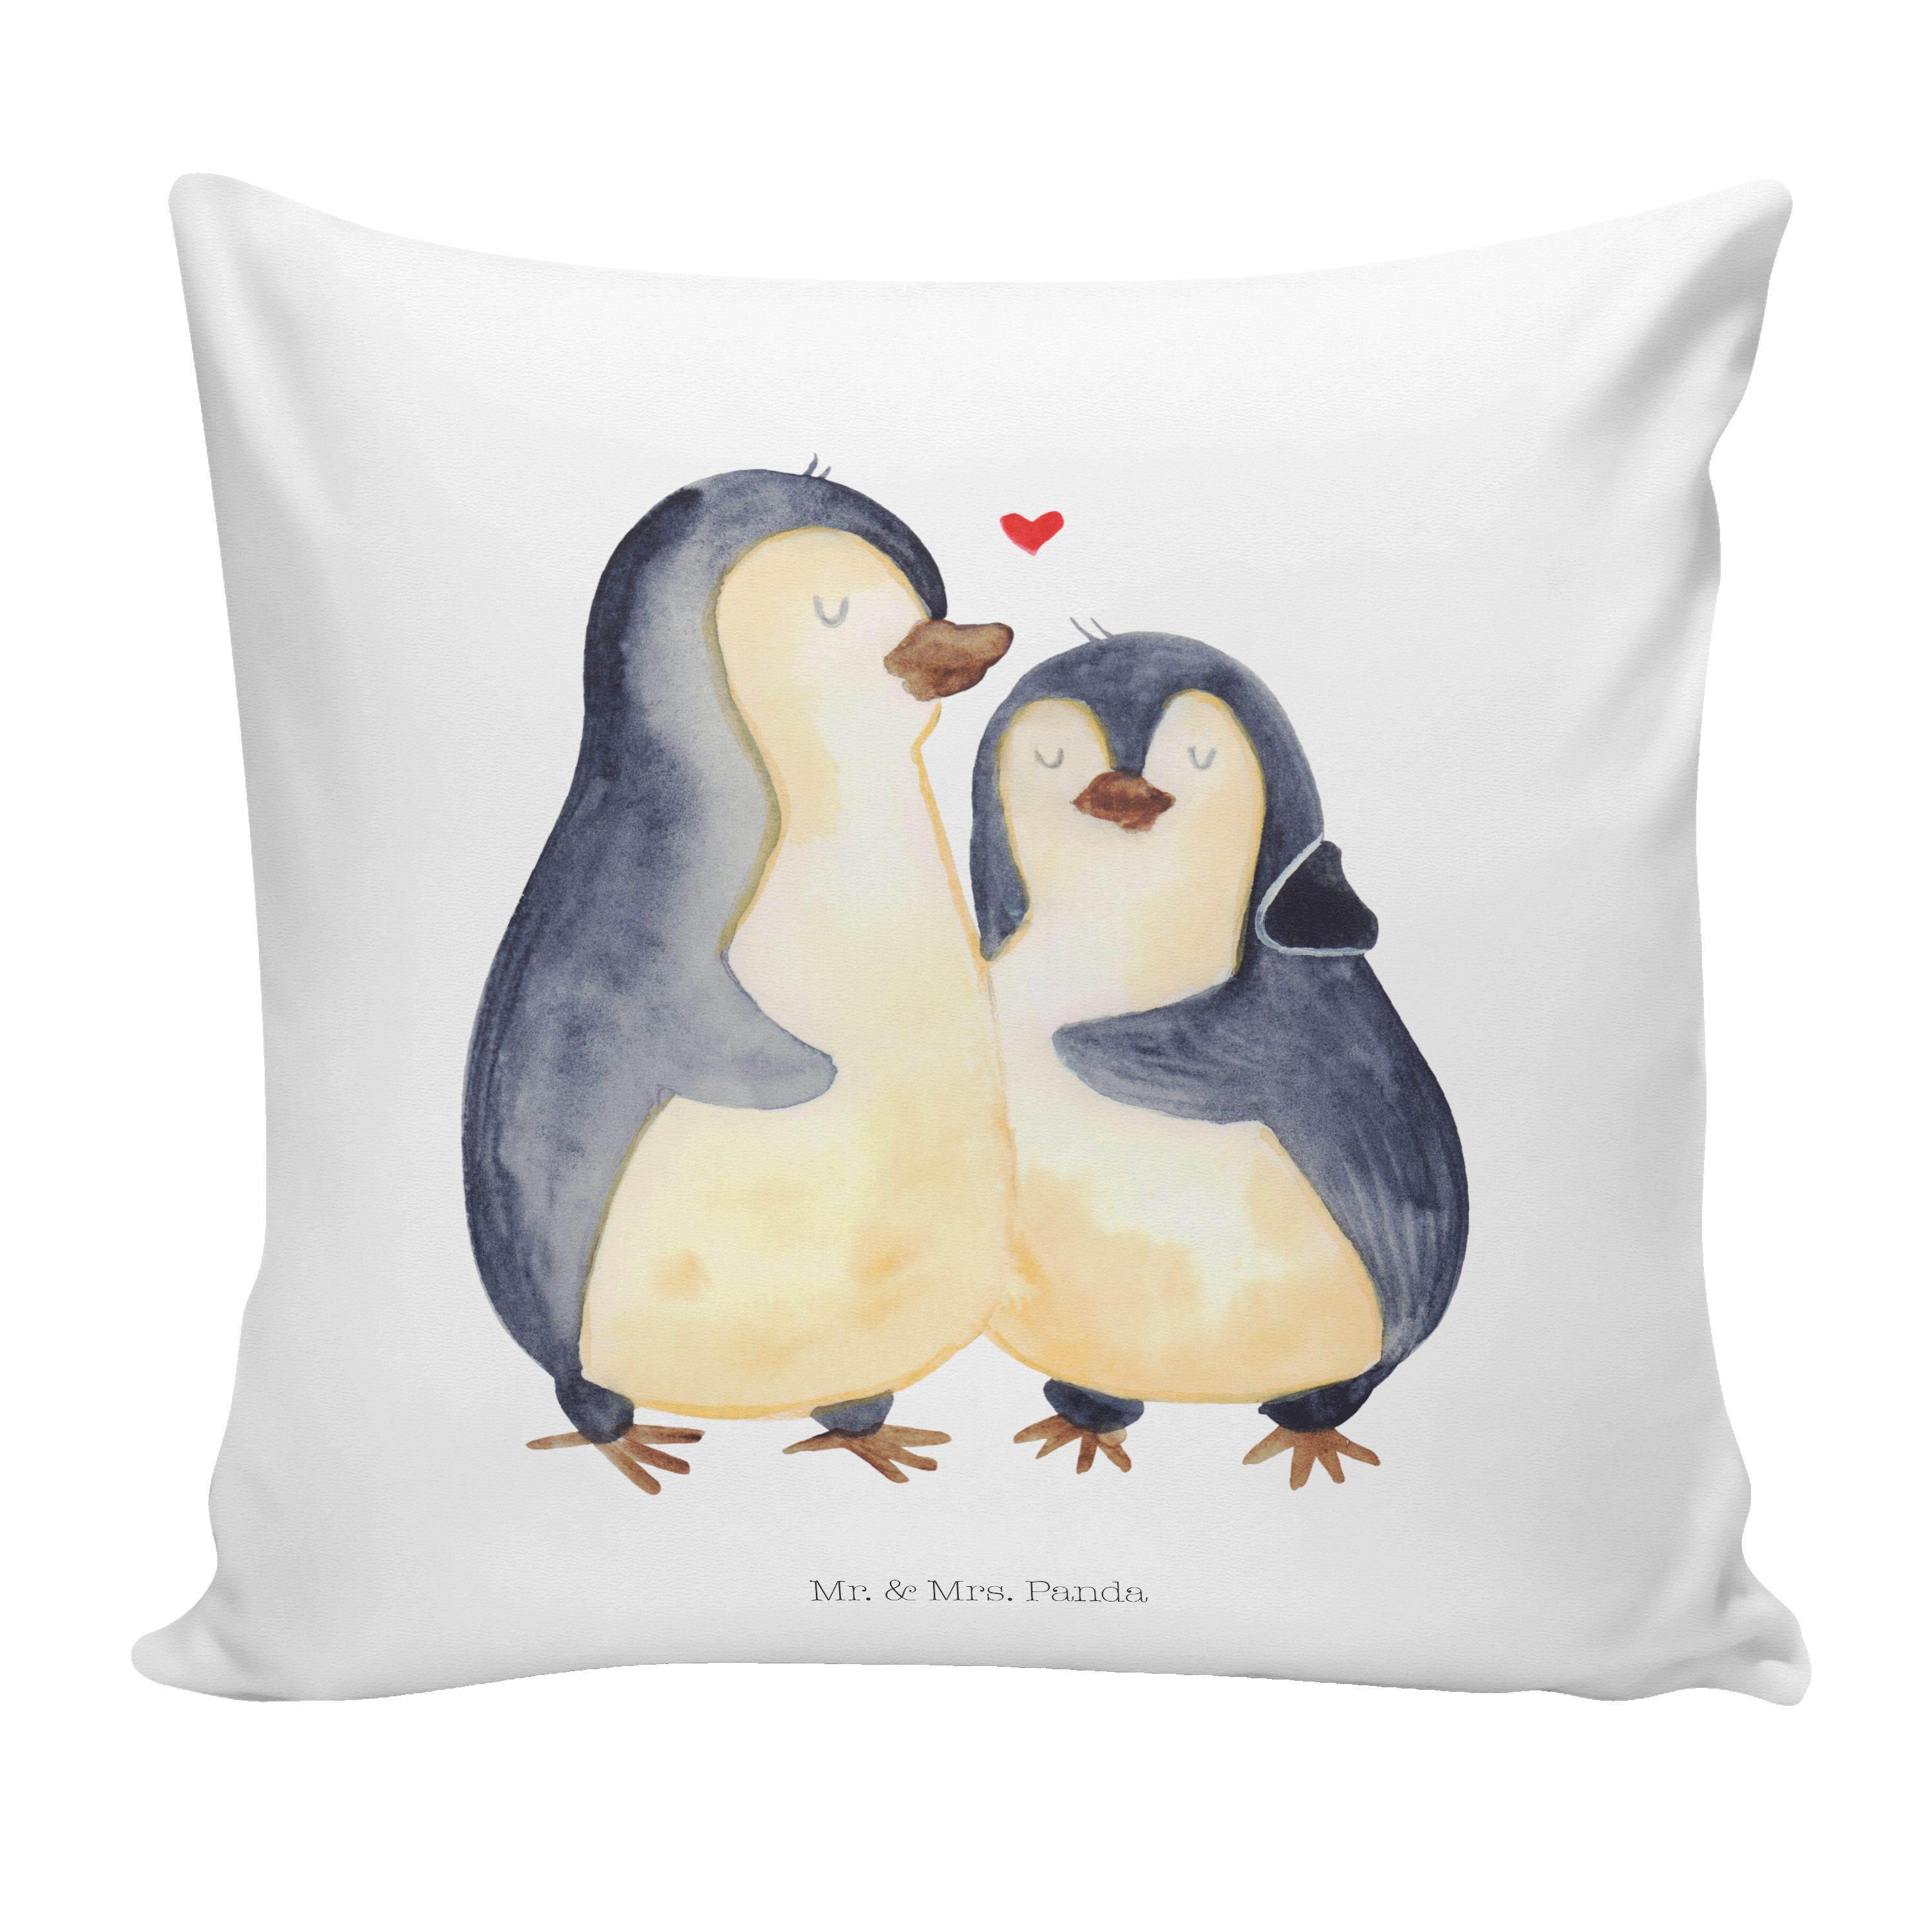 Mr. & Mrs. Panda Dekokissen Pinguin umarmend - Weiß - Geschenk, Kissenhülle, Hochzeitsgeschenk, L